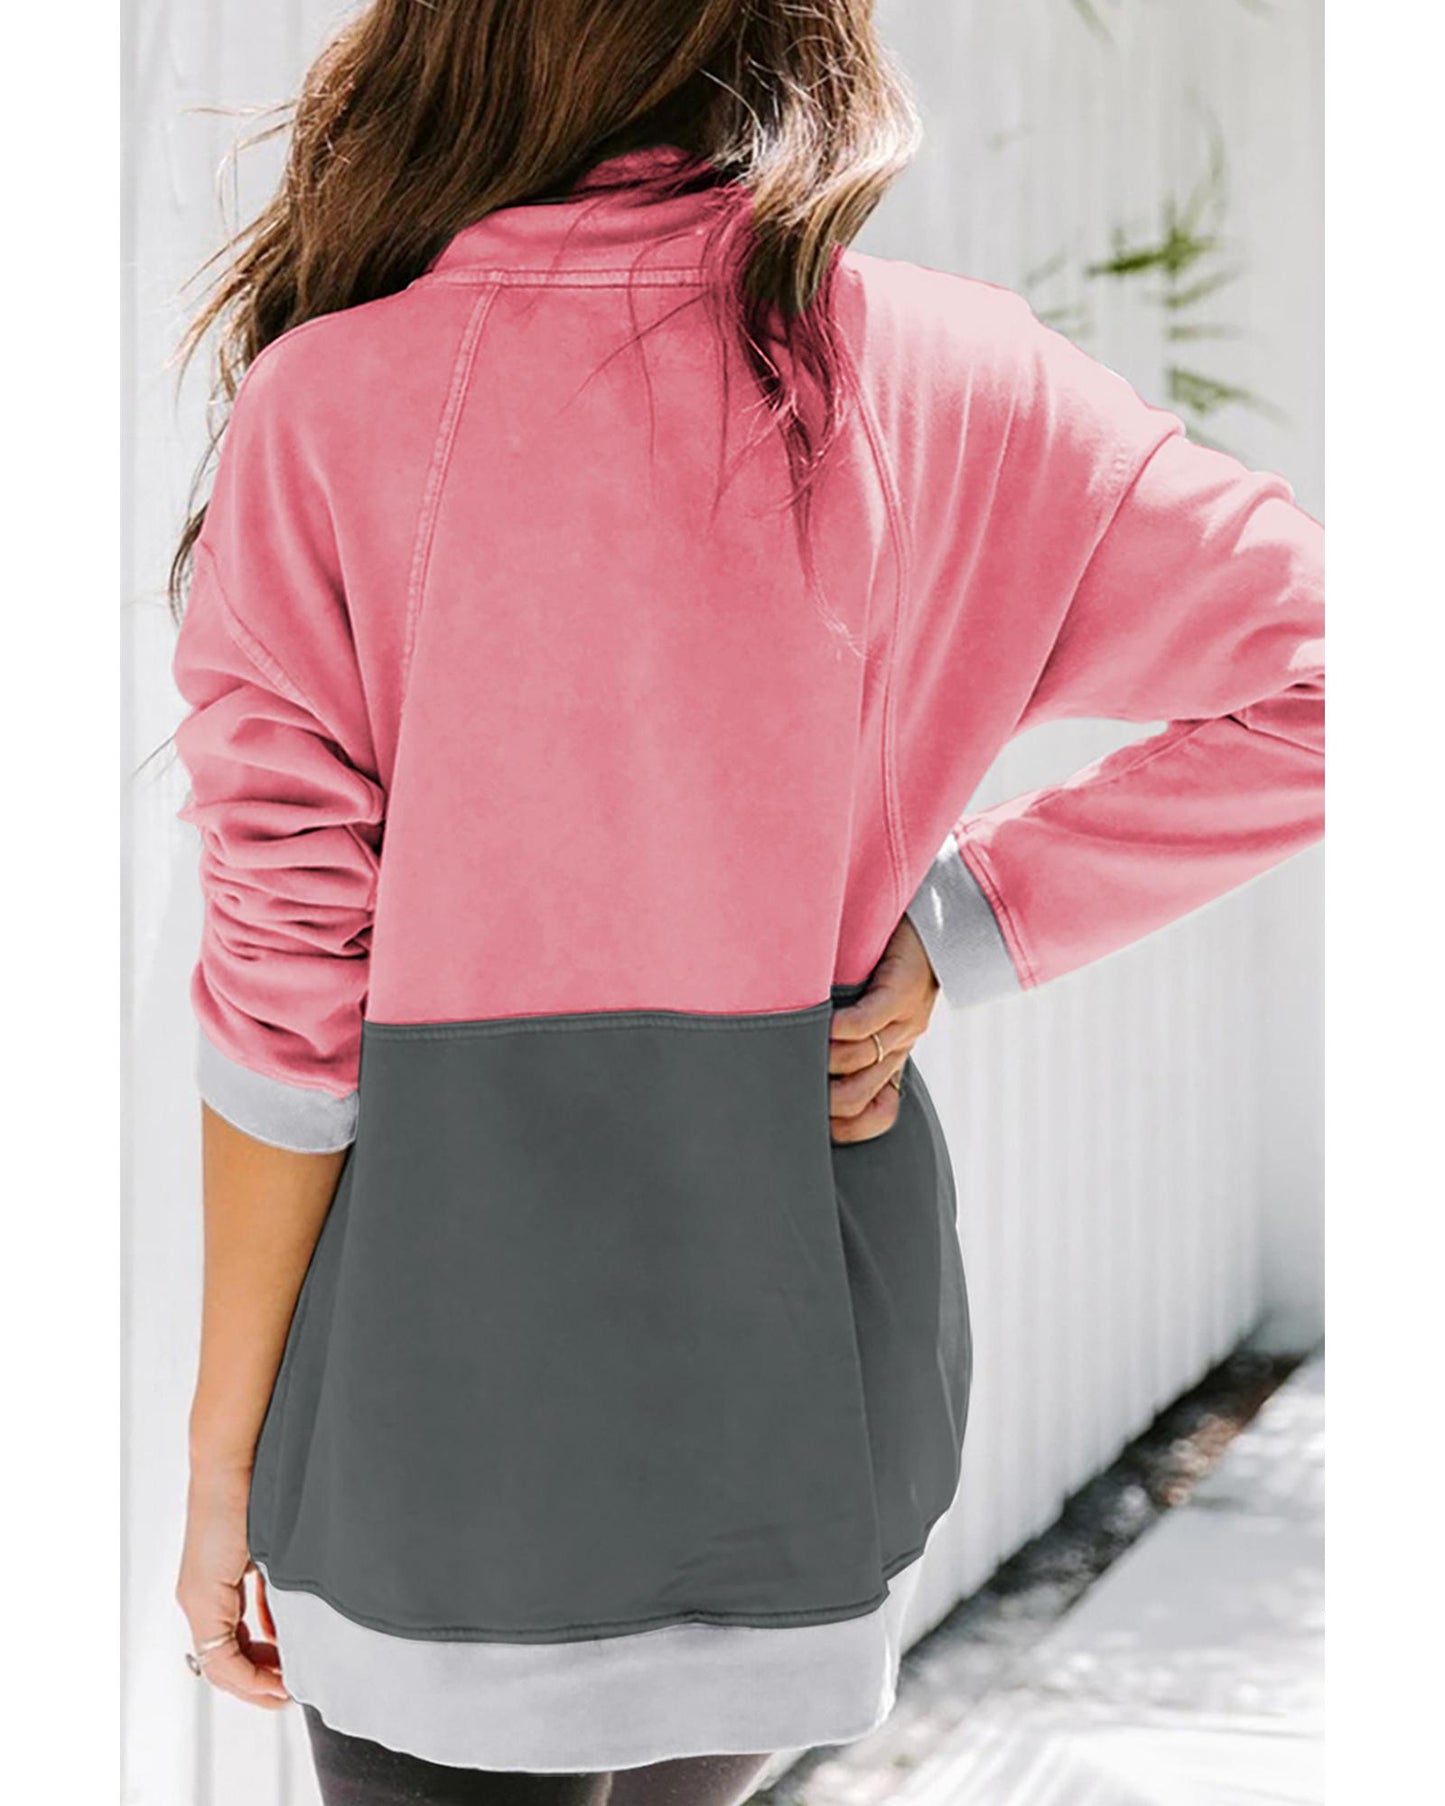 Azura Exchange Zipped Colorblock Sweatshirt with Pockets - M